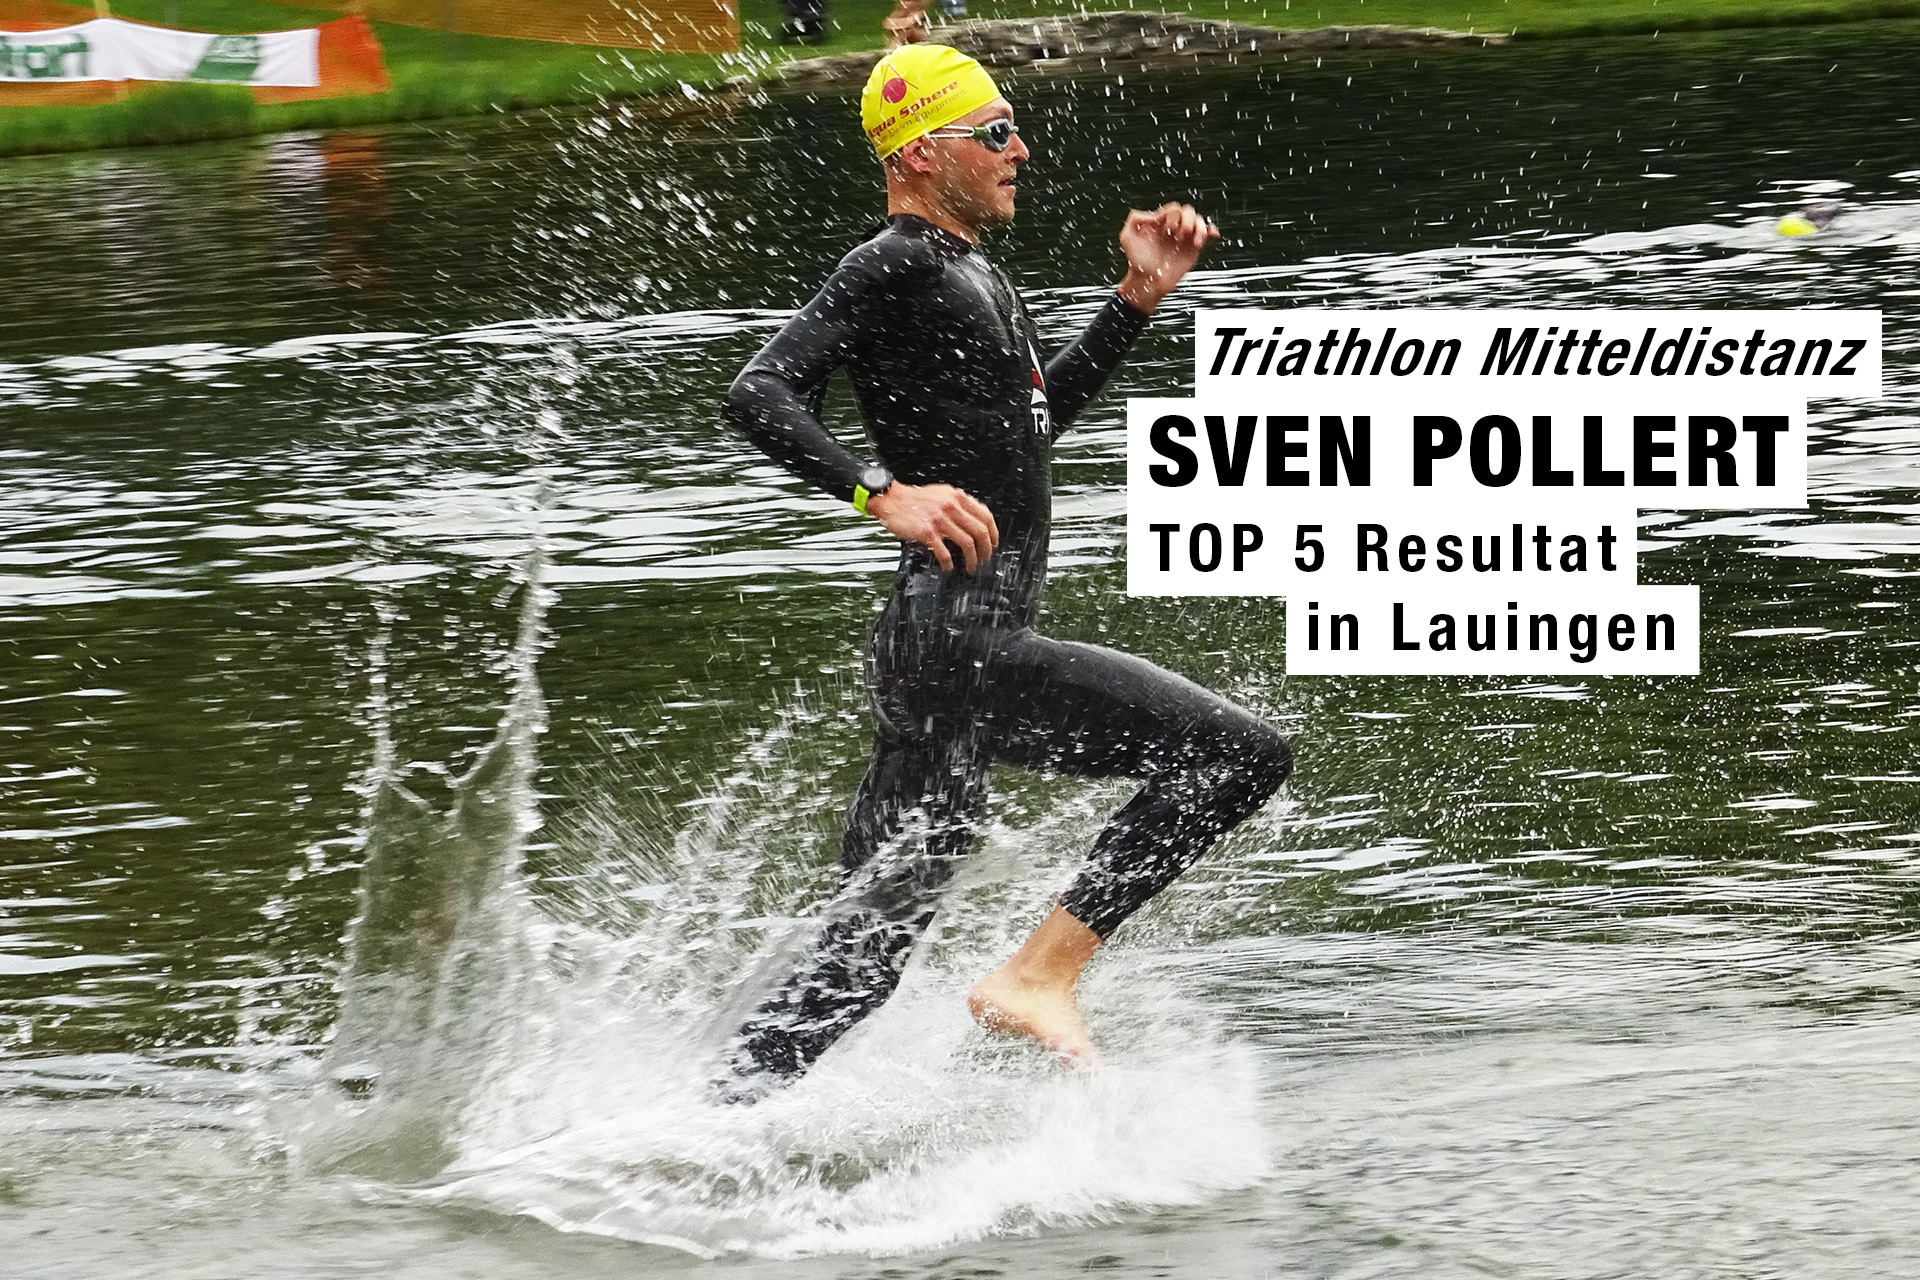 TRIATHLON LAUINGEN SVEN POLLERT BEI DER MITTELDISTANZ TOP 5 / 1st Out of Water after 2100 m © Sven Pollert